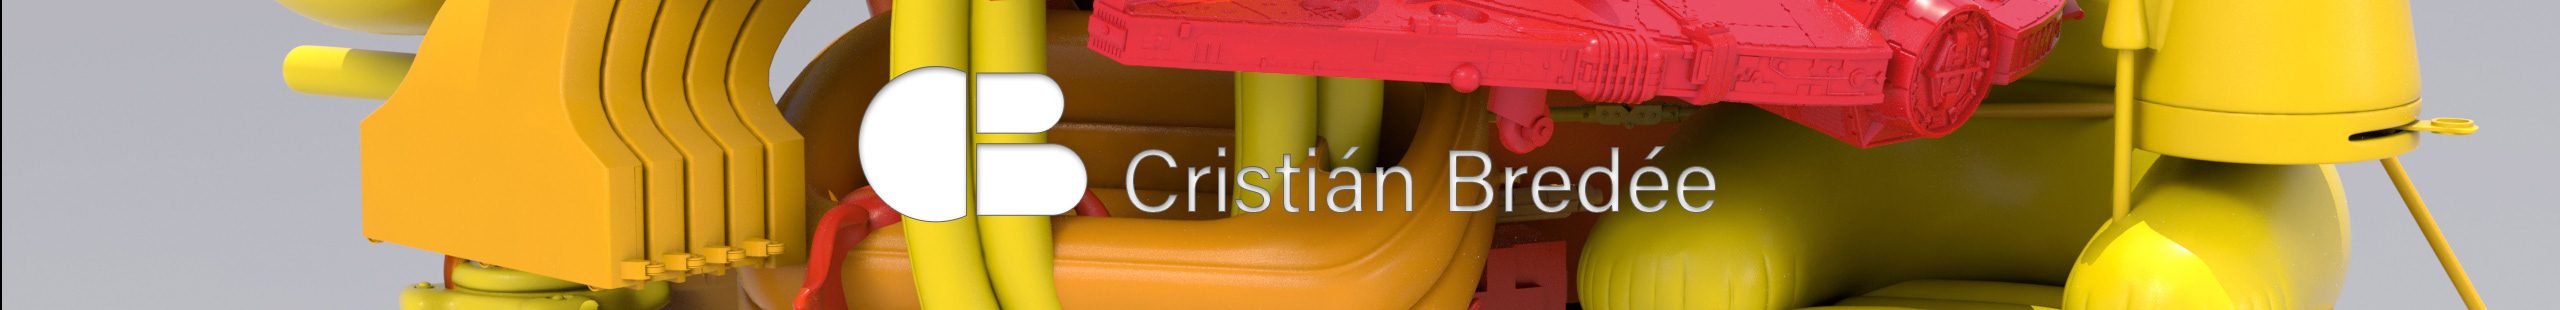 Banner de perfil de Cristian Bredee